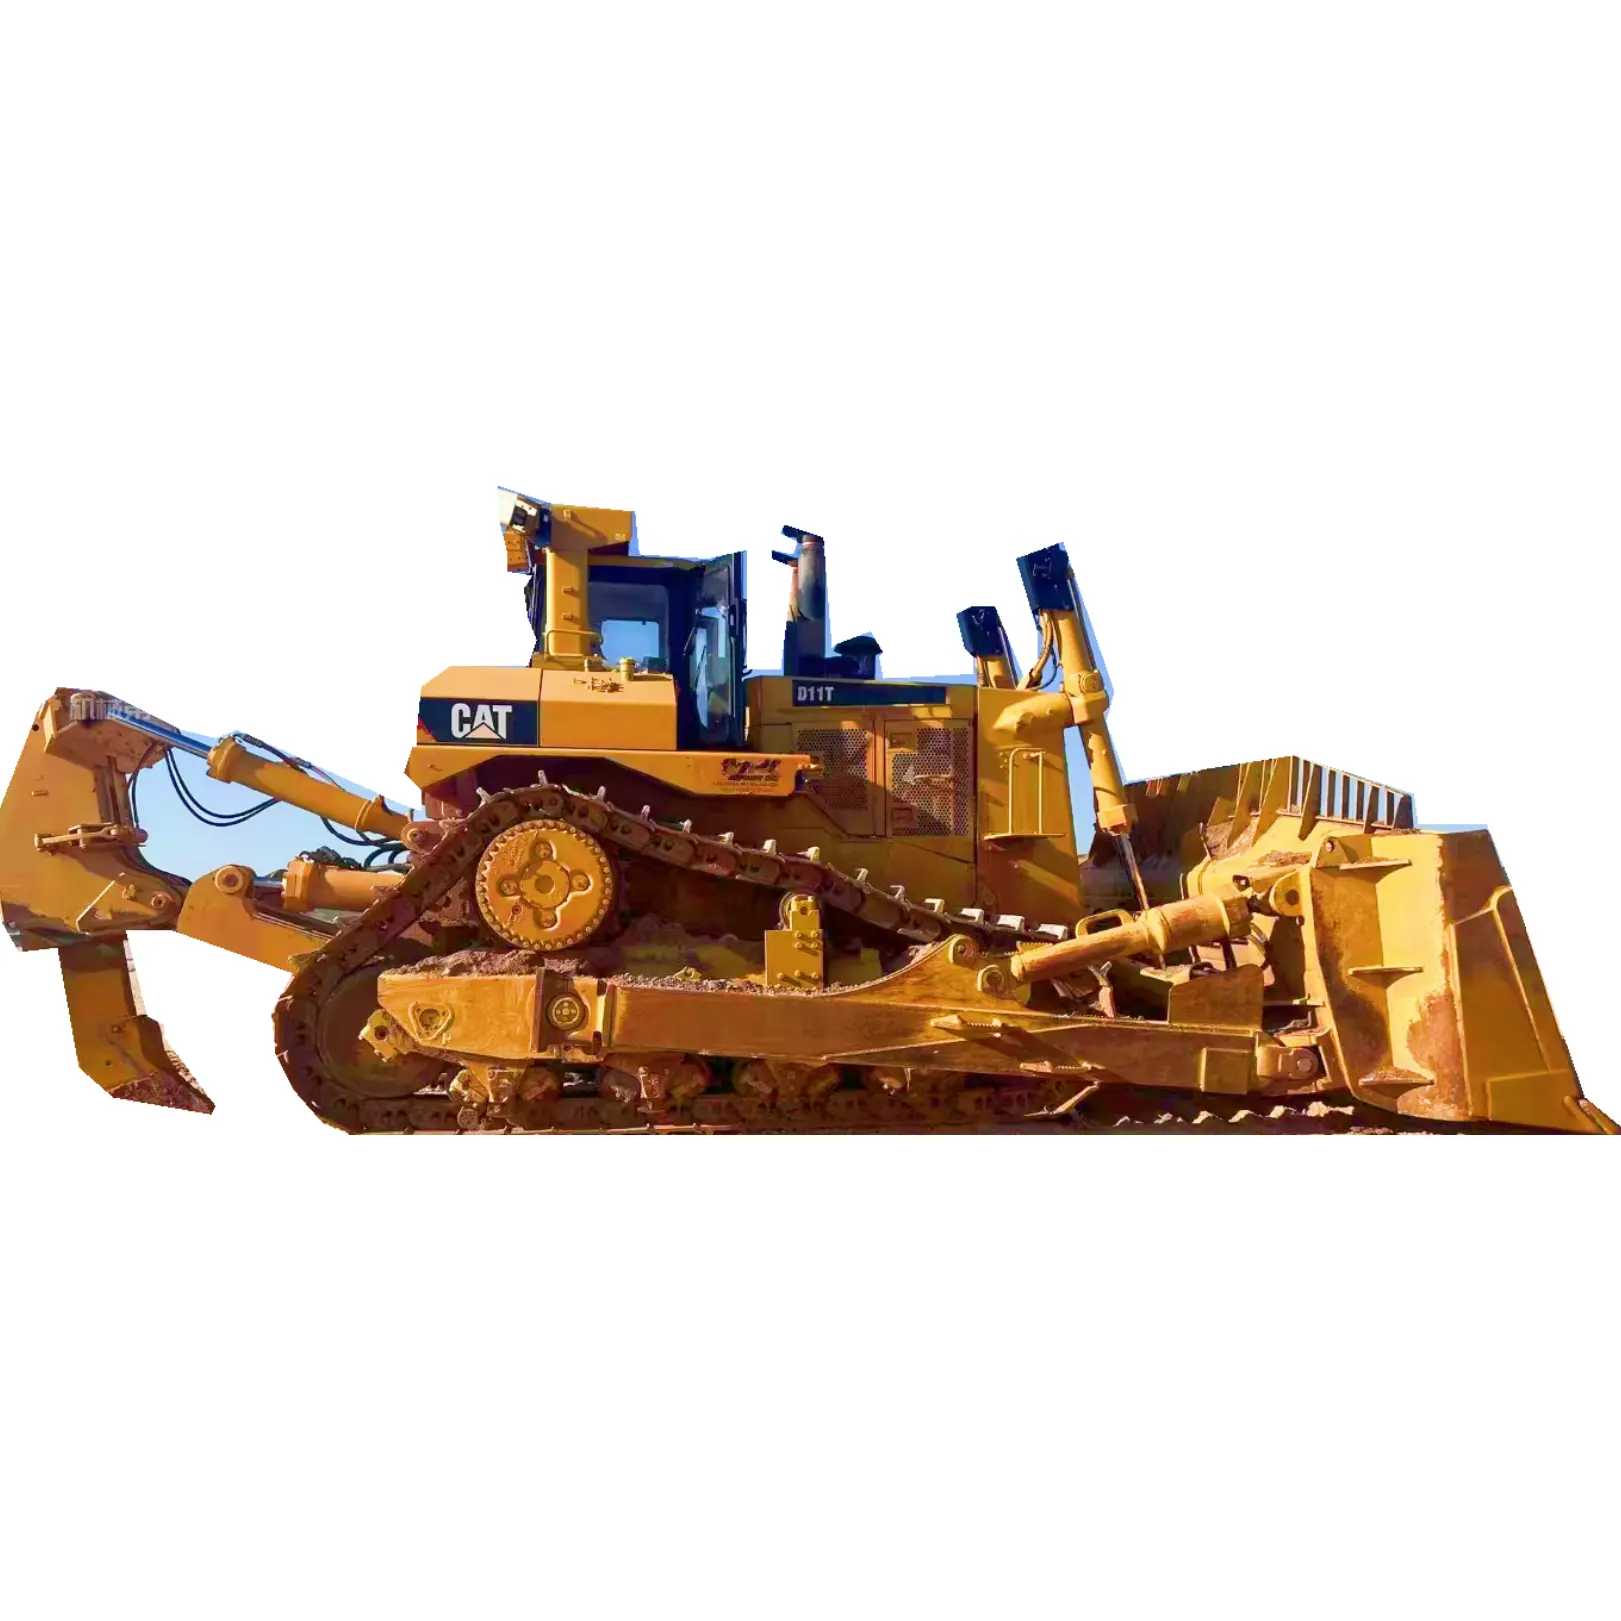 Usato bulldozer CAT Caterpillar D11T originale giappone sceond-hand bulldozer cat d11 vendita calda di alta qualità Cat d11t in vendita